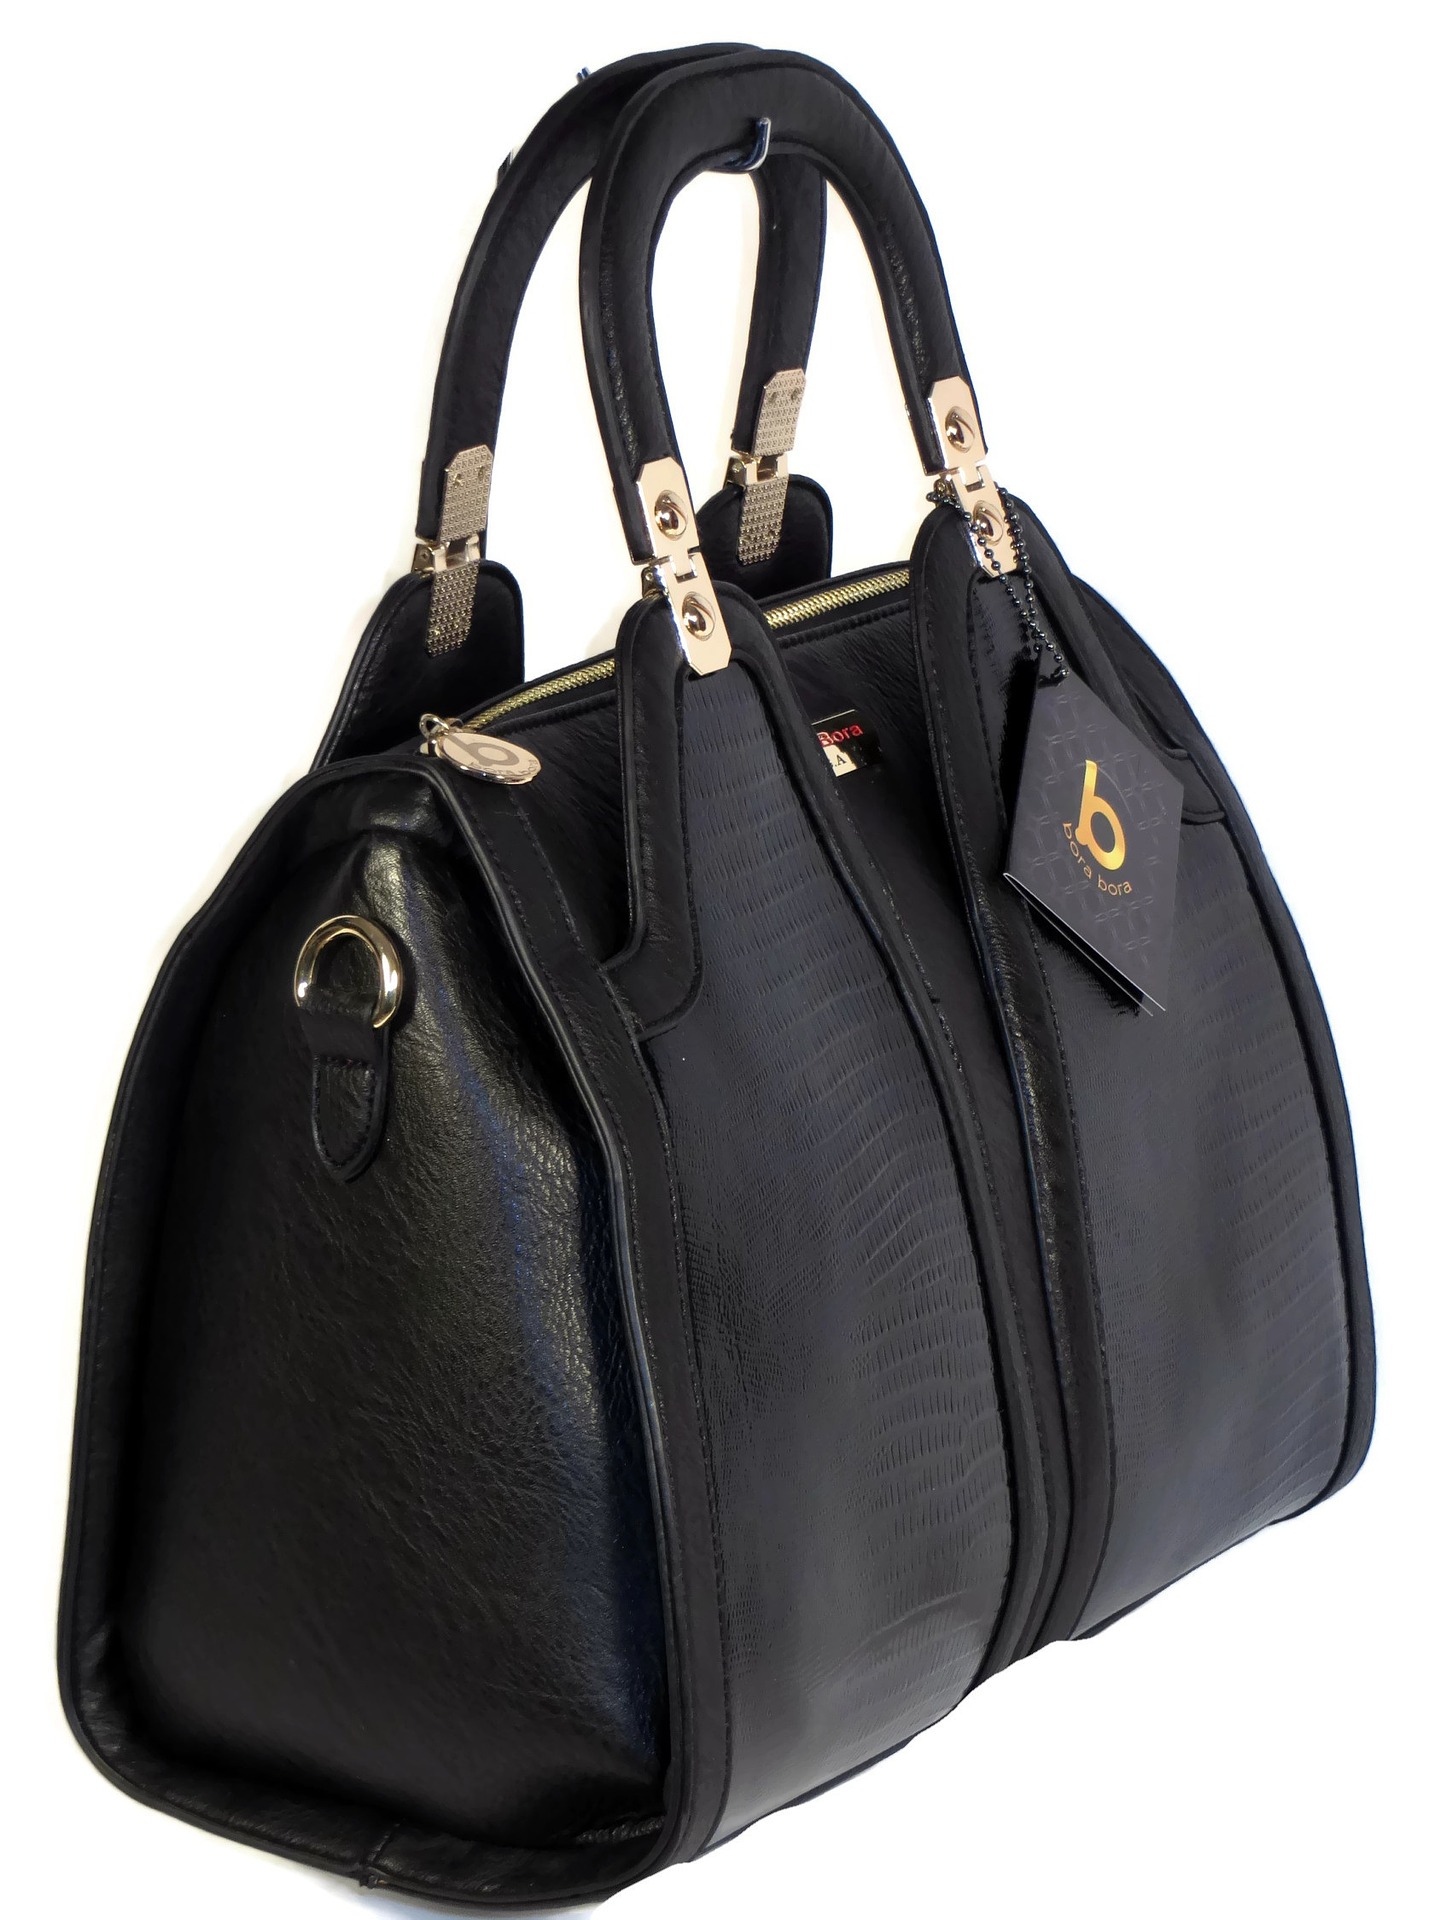 handbag gf13432c17 1920